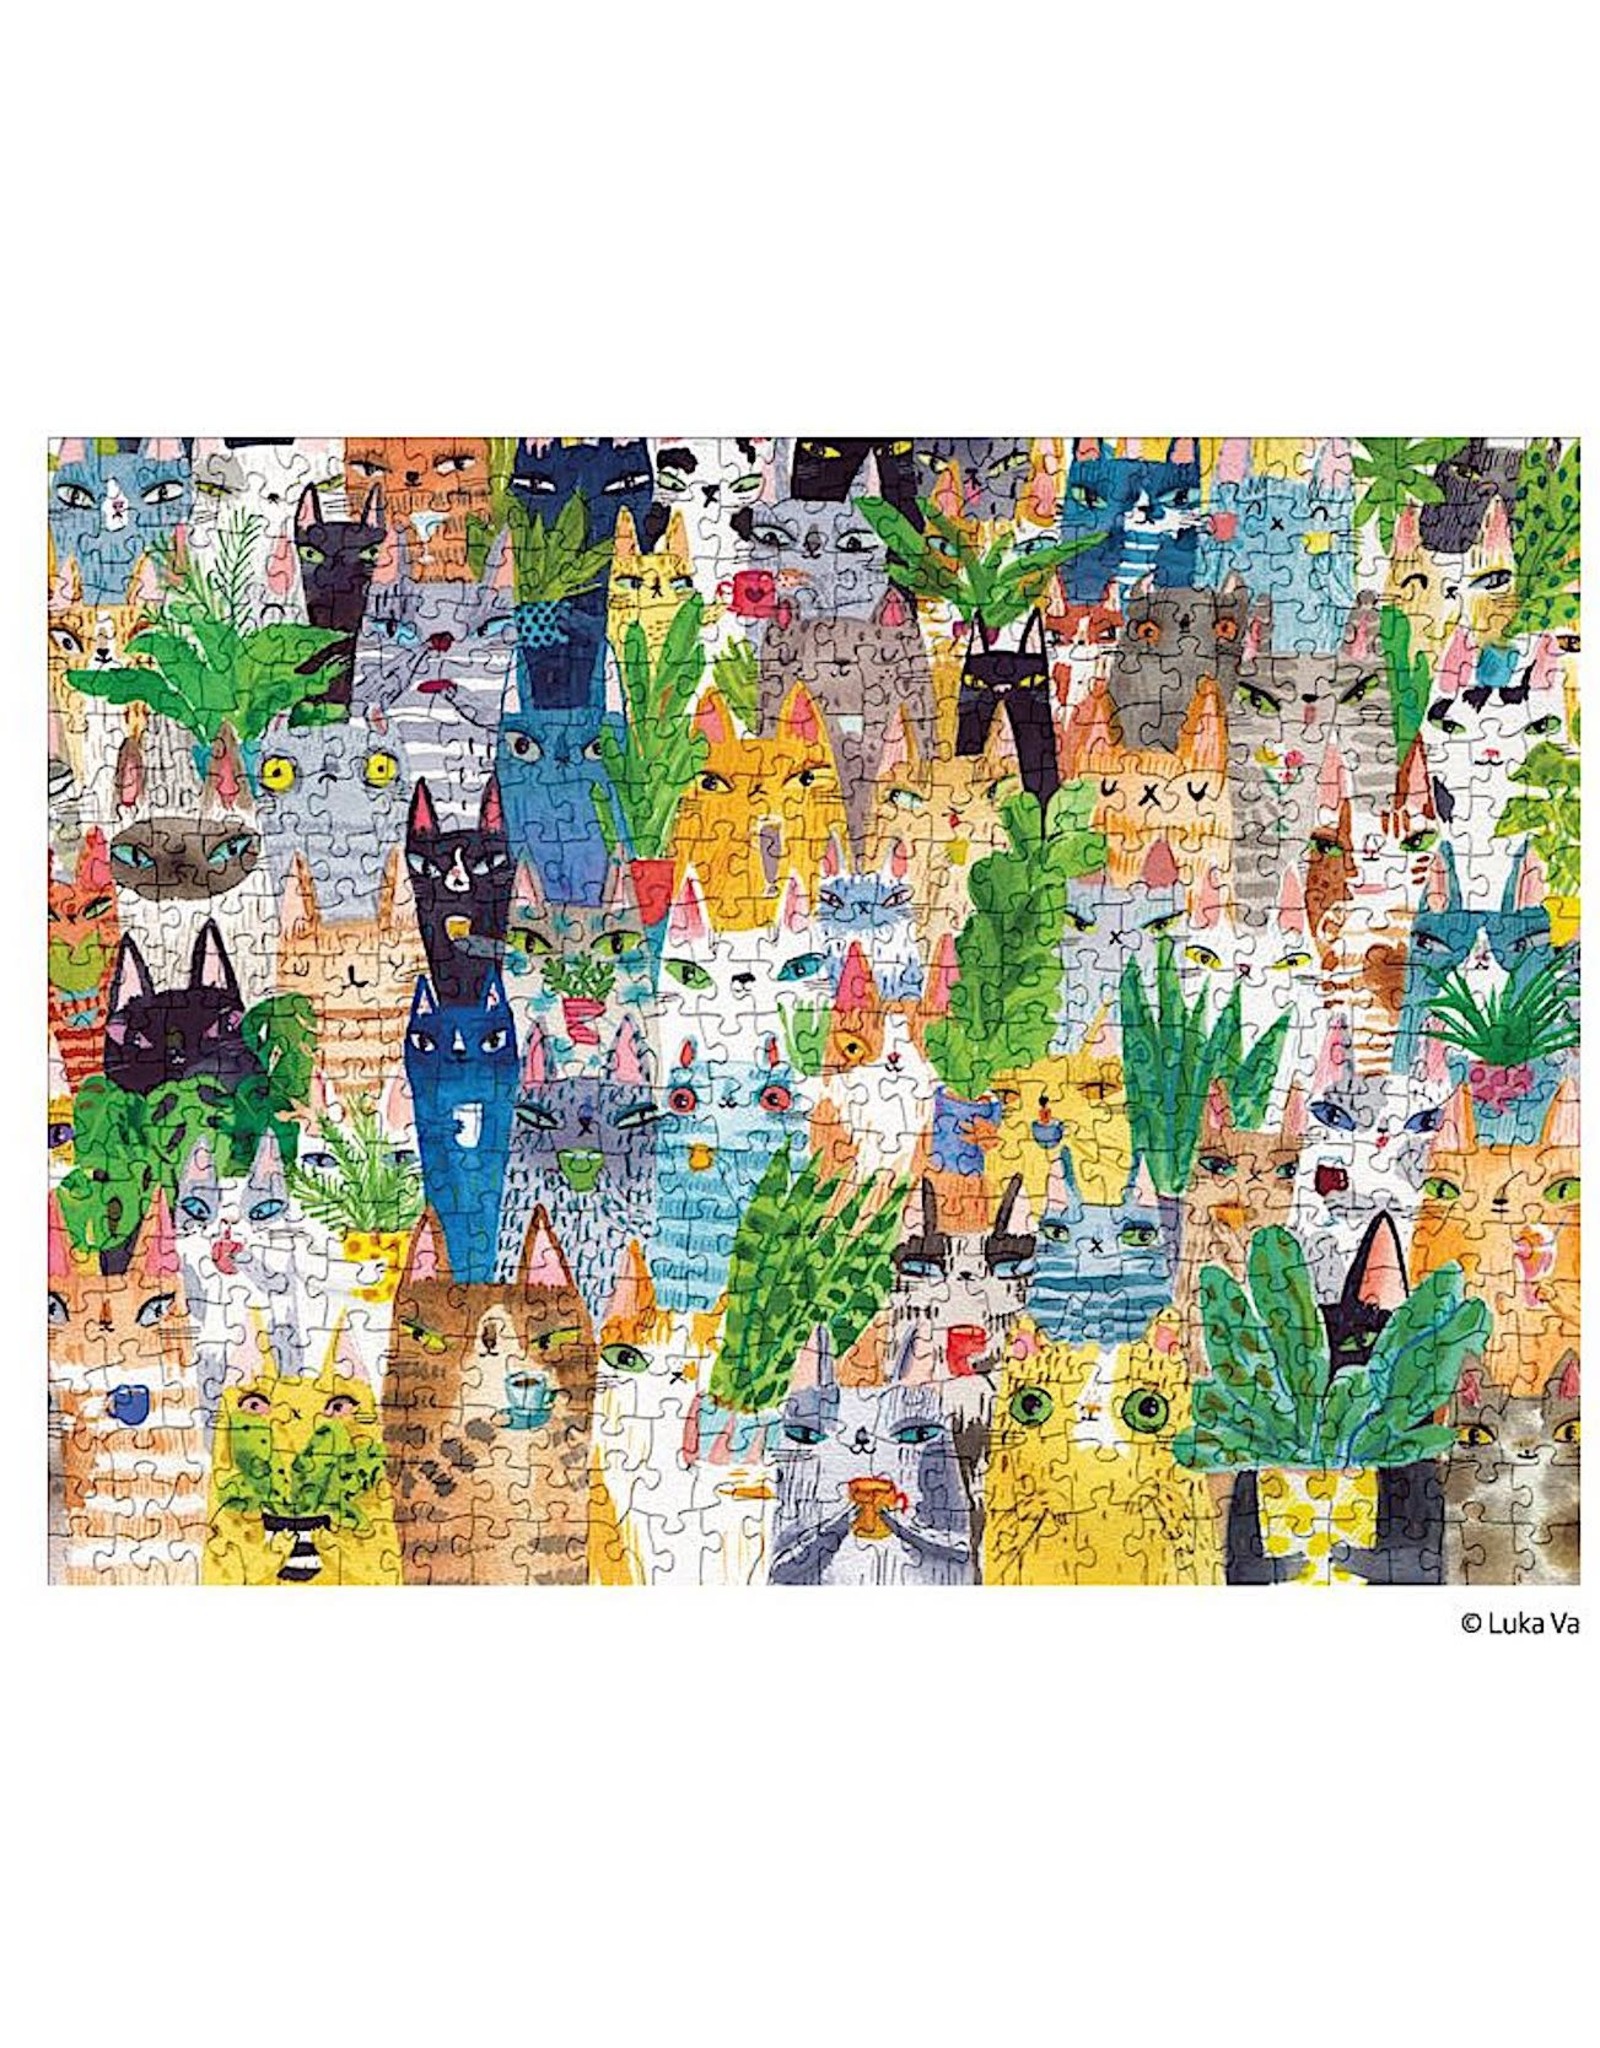 WerkShoppe Jigsaw Puzzle Cat Plant Exchange 500 Piece